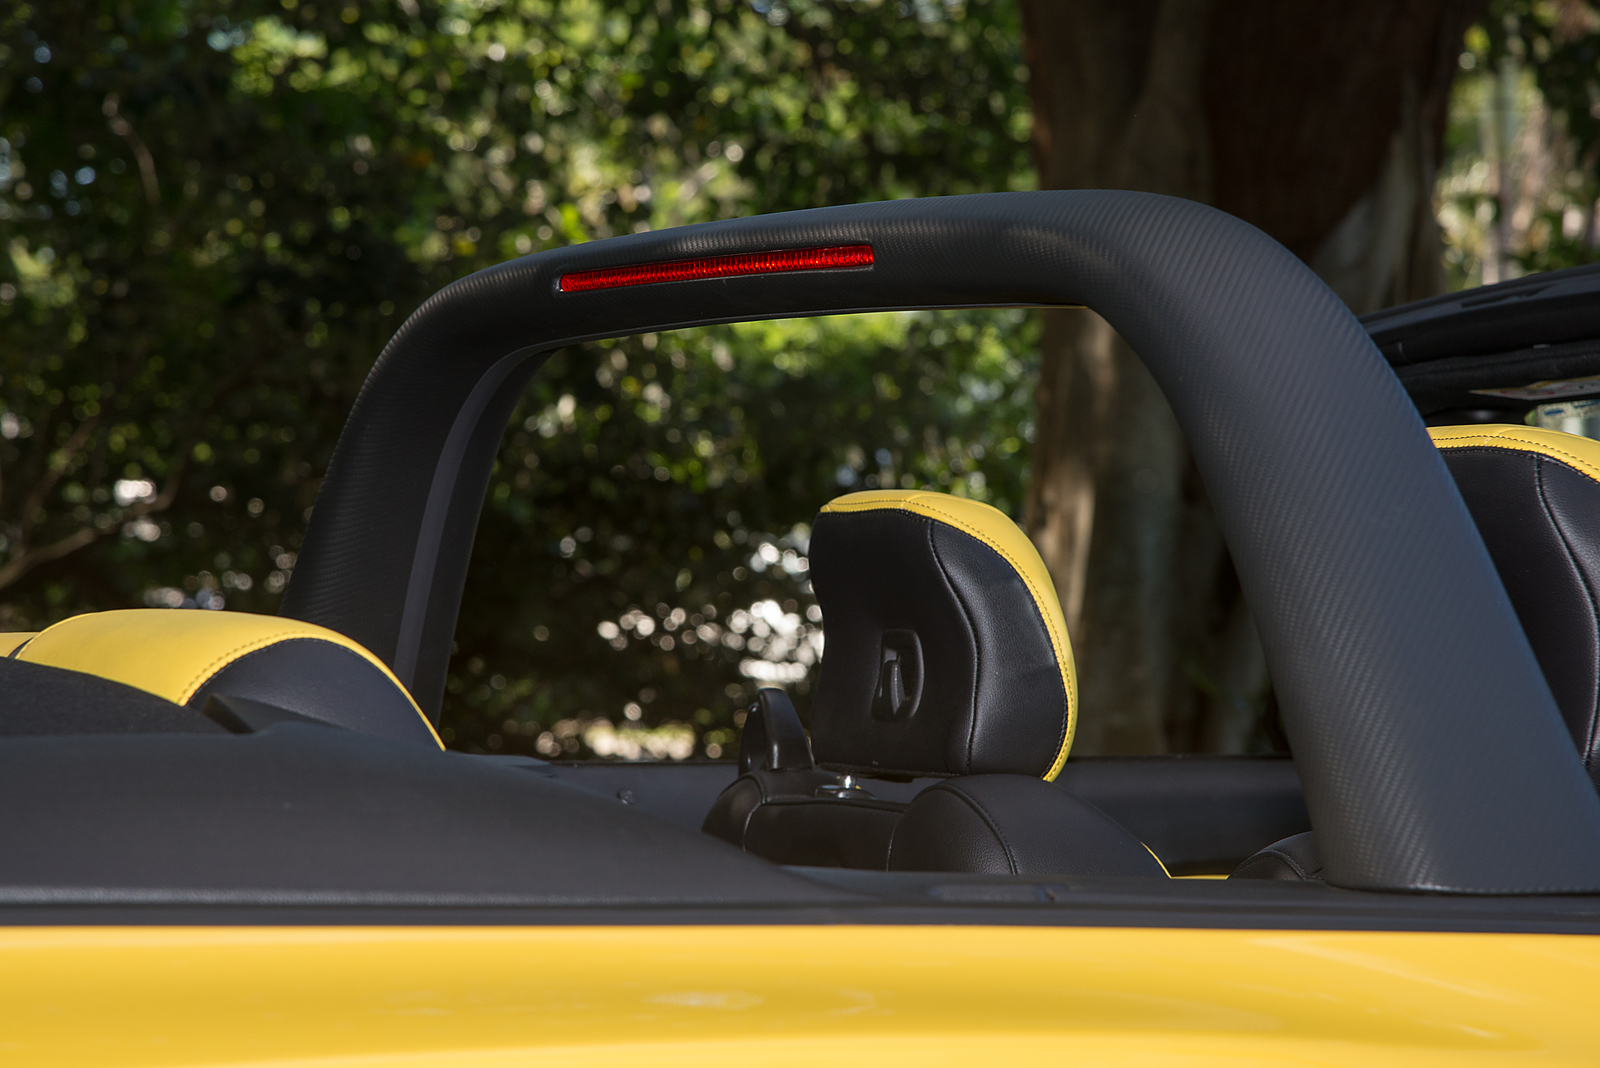 2015-22 Mustang Convertible Light Bar - Carbon Fibre   WINTER  SALE